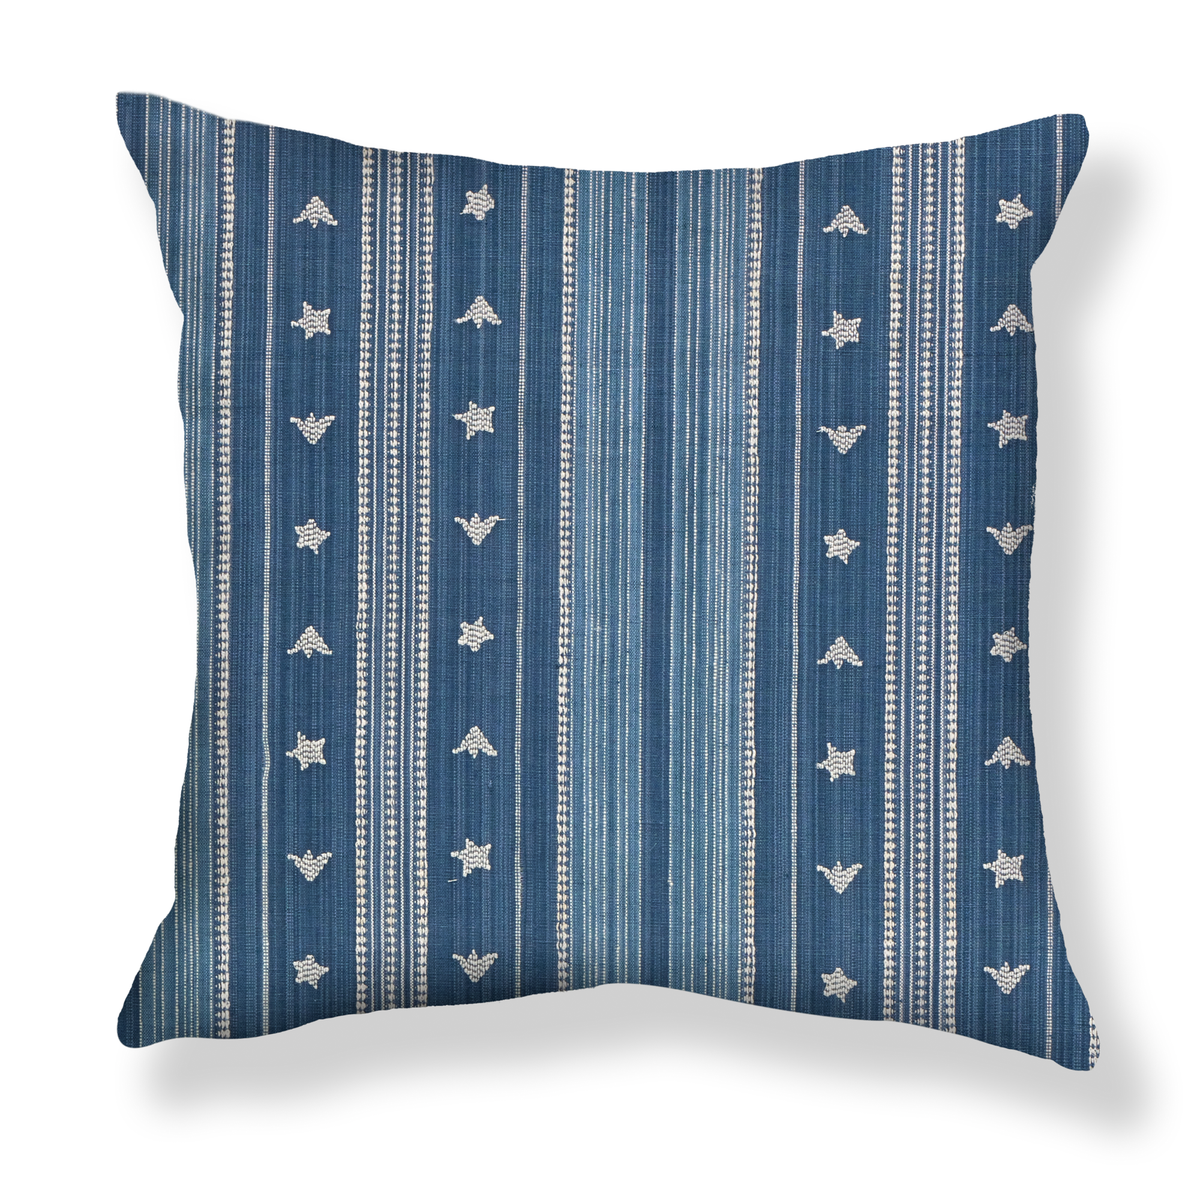 Budding Stripe Pillow in Ocean Blue